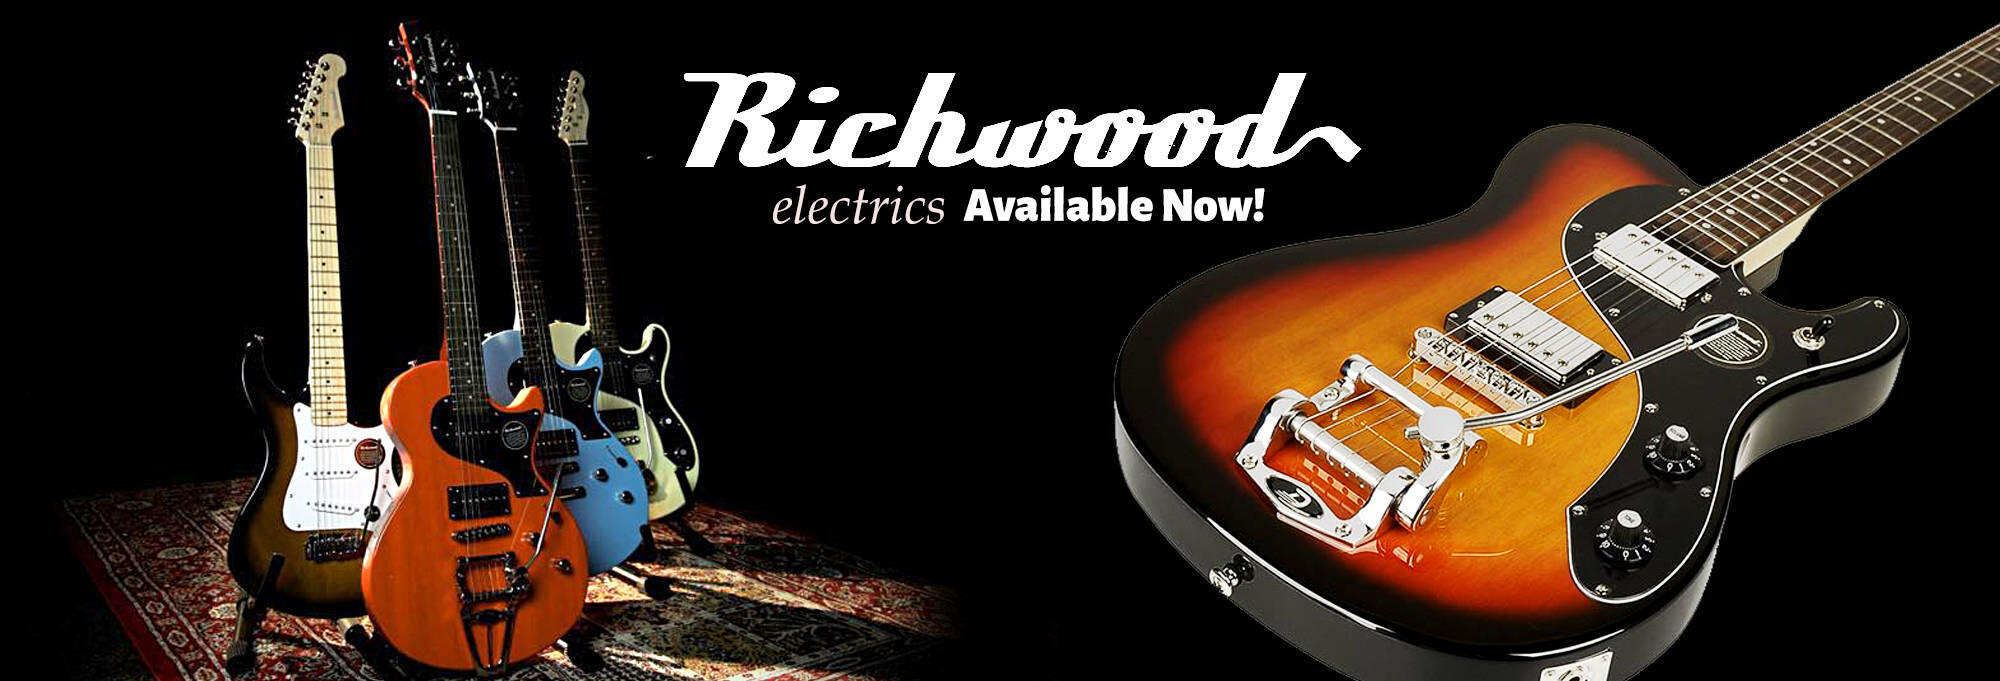 New! Richwood Electrics